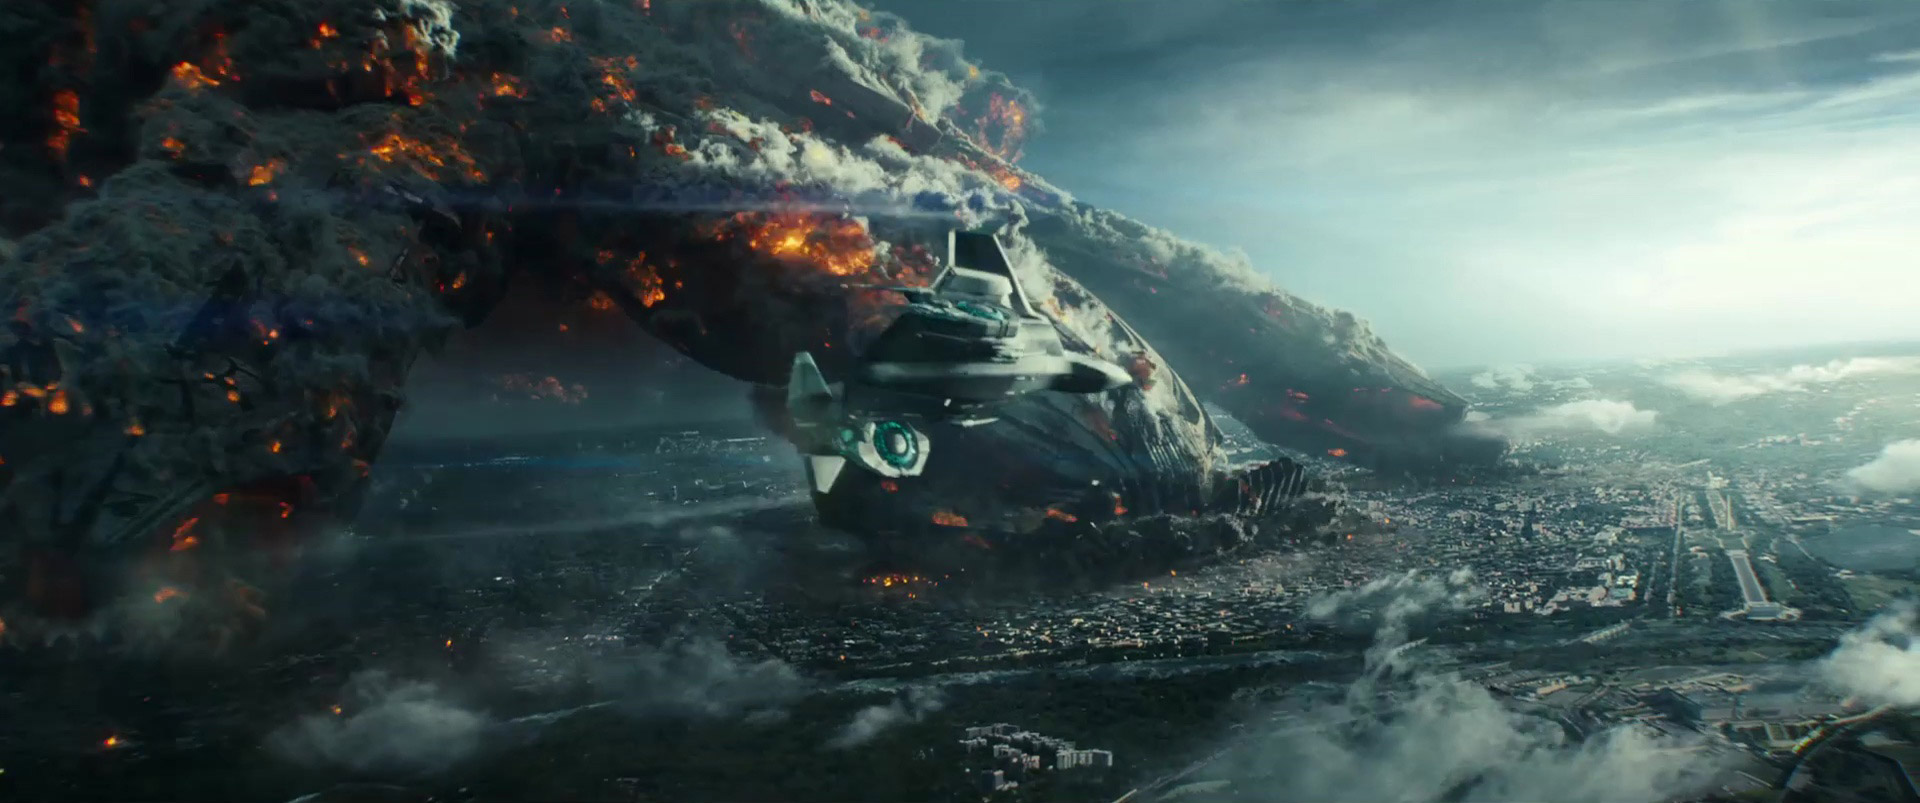 Explosive Independence Day: Resurgence Trailer! | Sci-Fi Movie